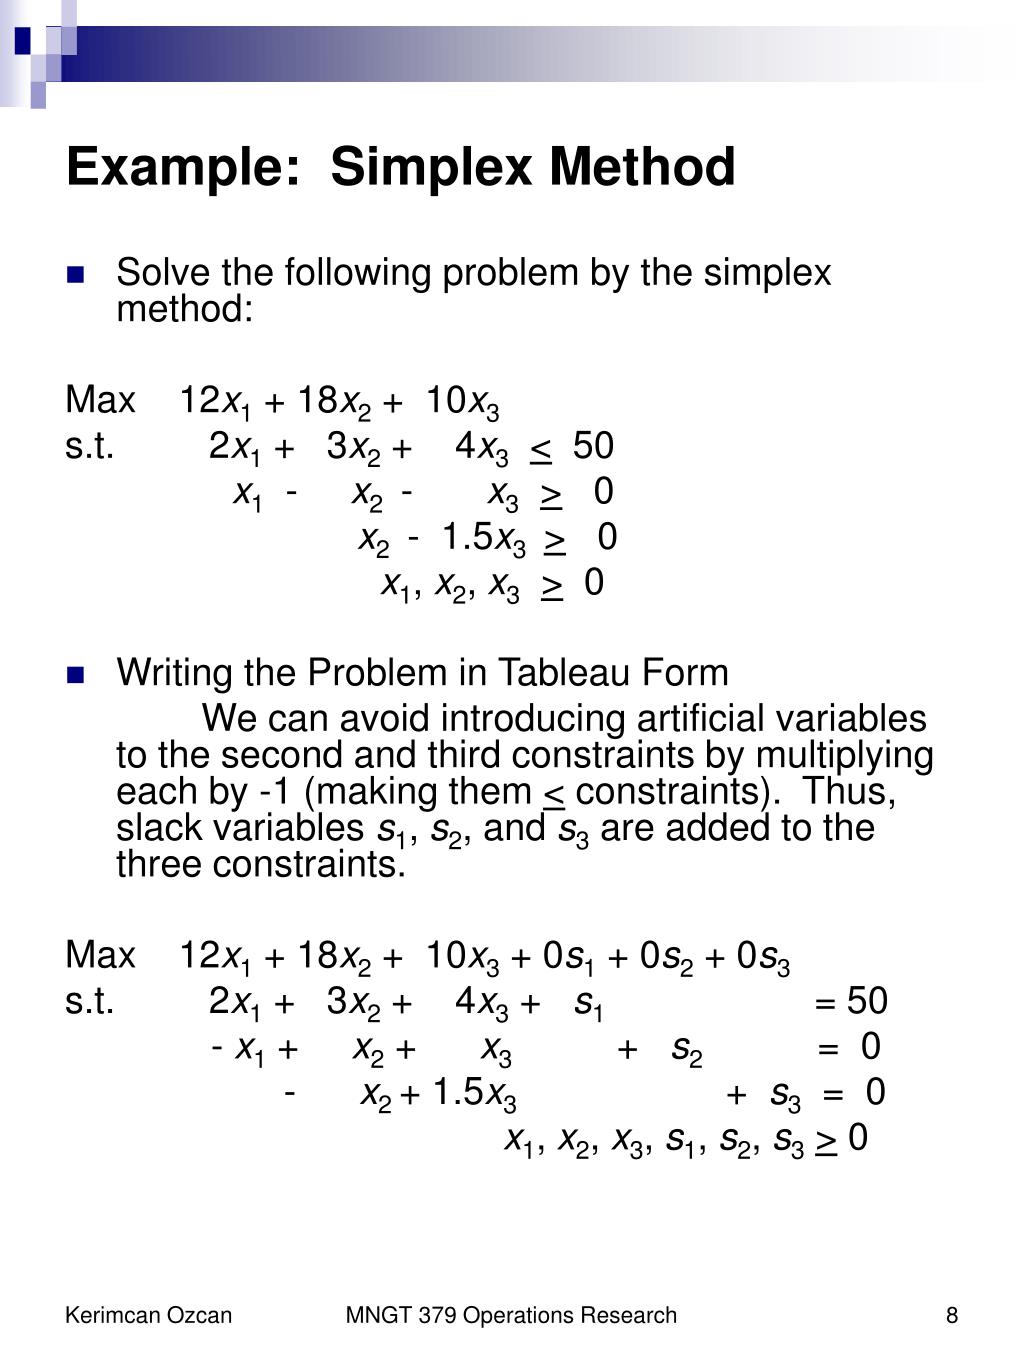 linear programming simplex method example